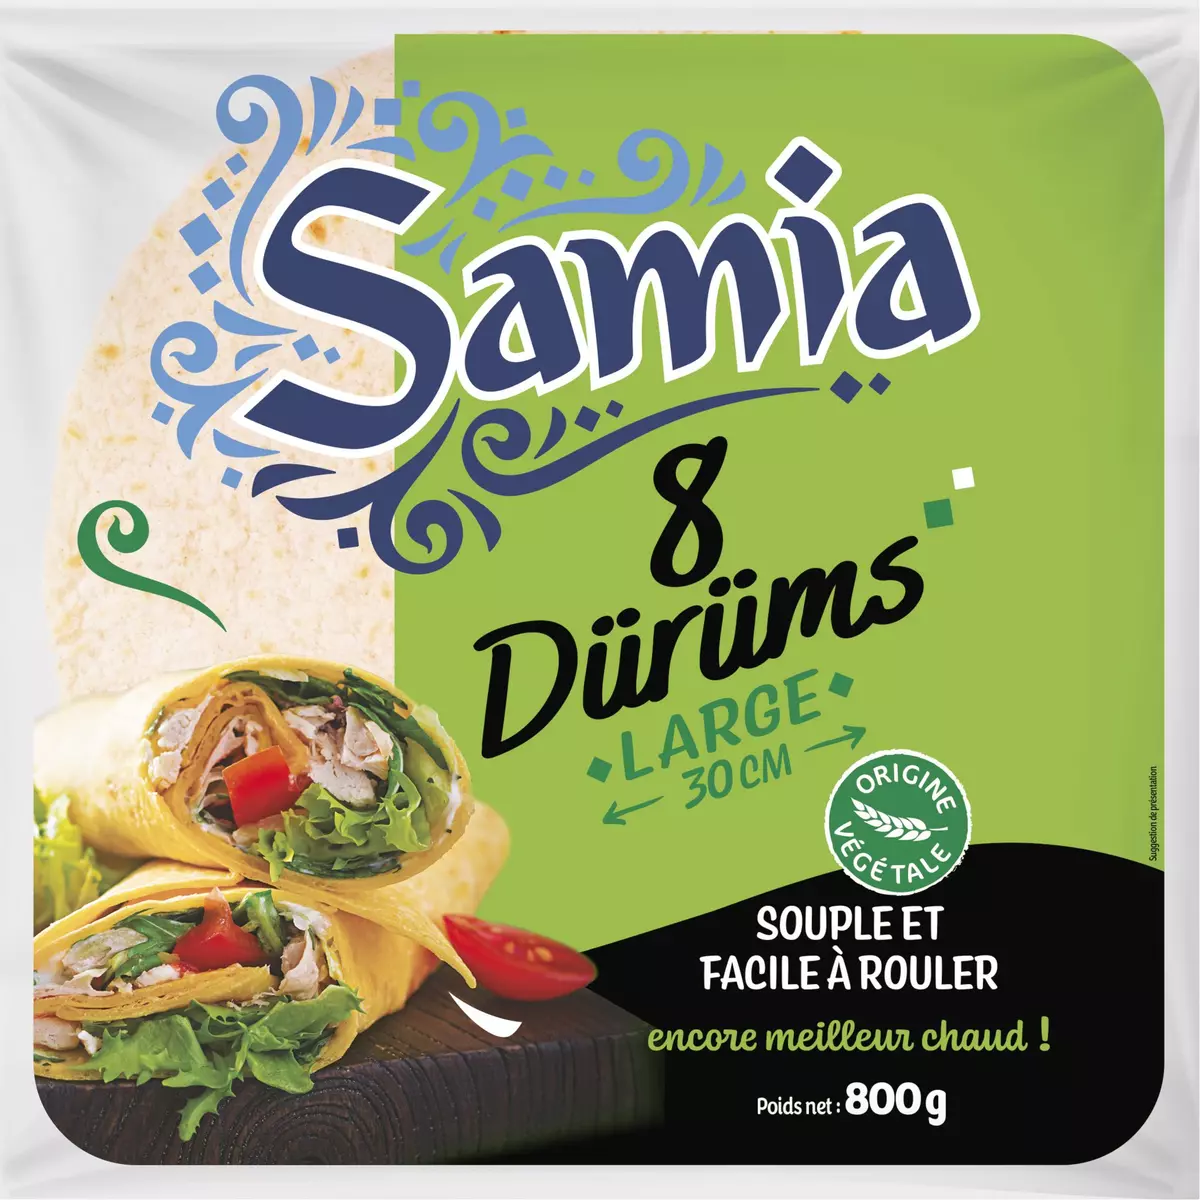 SAMIA Wraps Dürüm spécial kebab 8 dürüm 800g